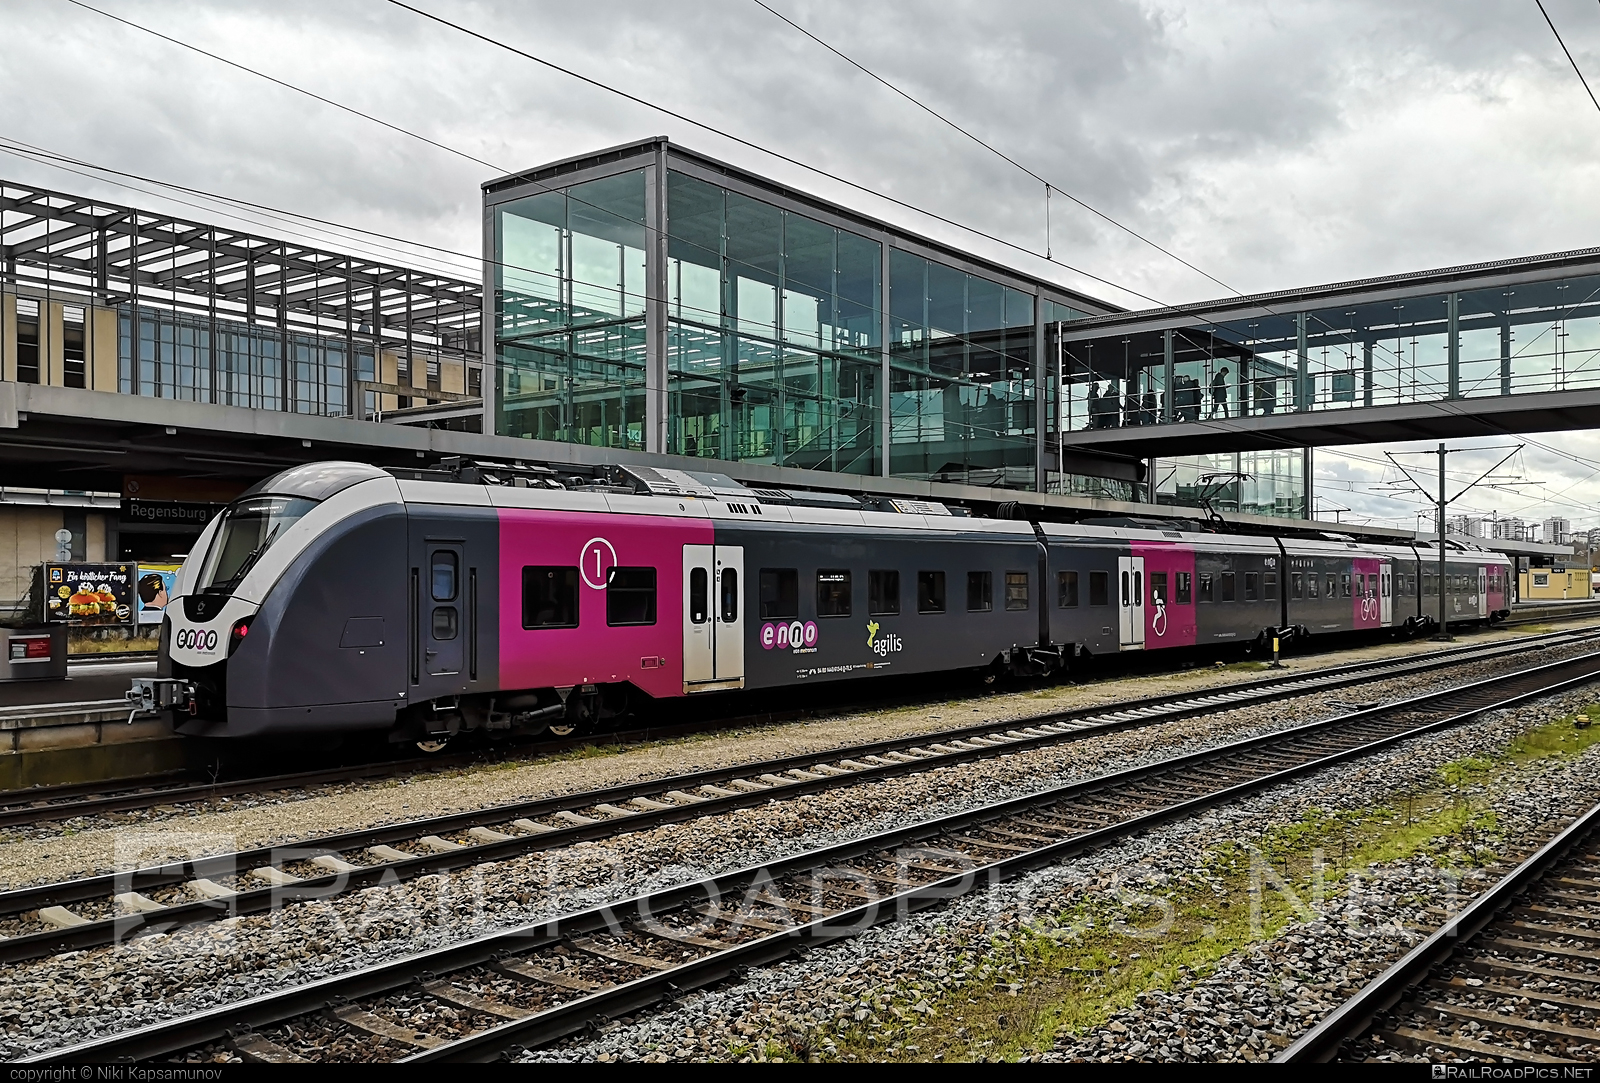 Alstom Coradia Continental - 1440 613-6 operated by metronom Eisenbahngesellschaft mbH #agilis #alstom #alstomCoradia #alstomCoradiaContinental #enno #metronom #tls